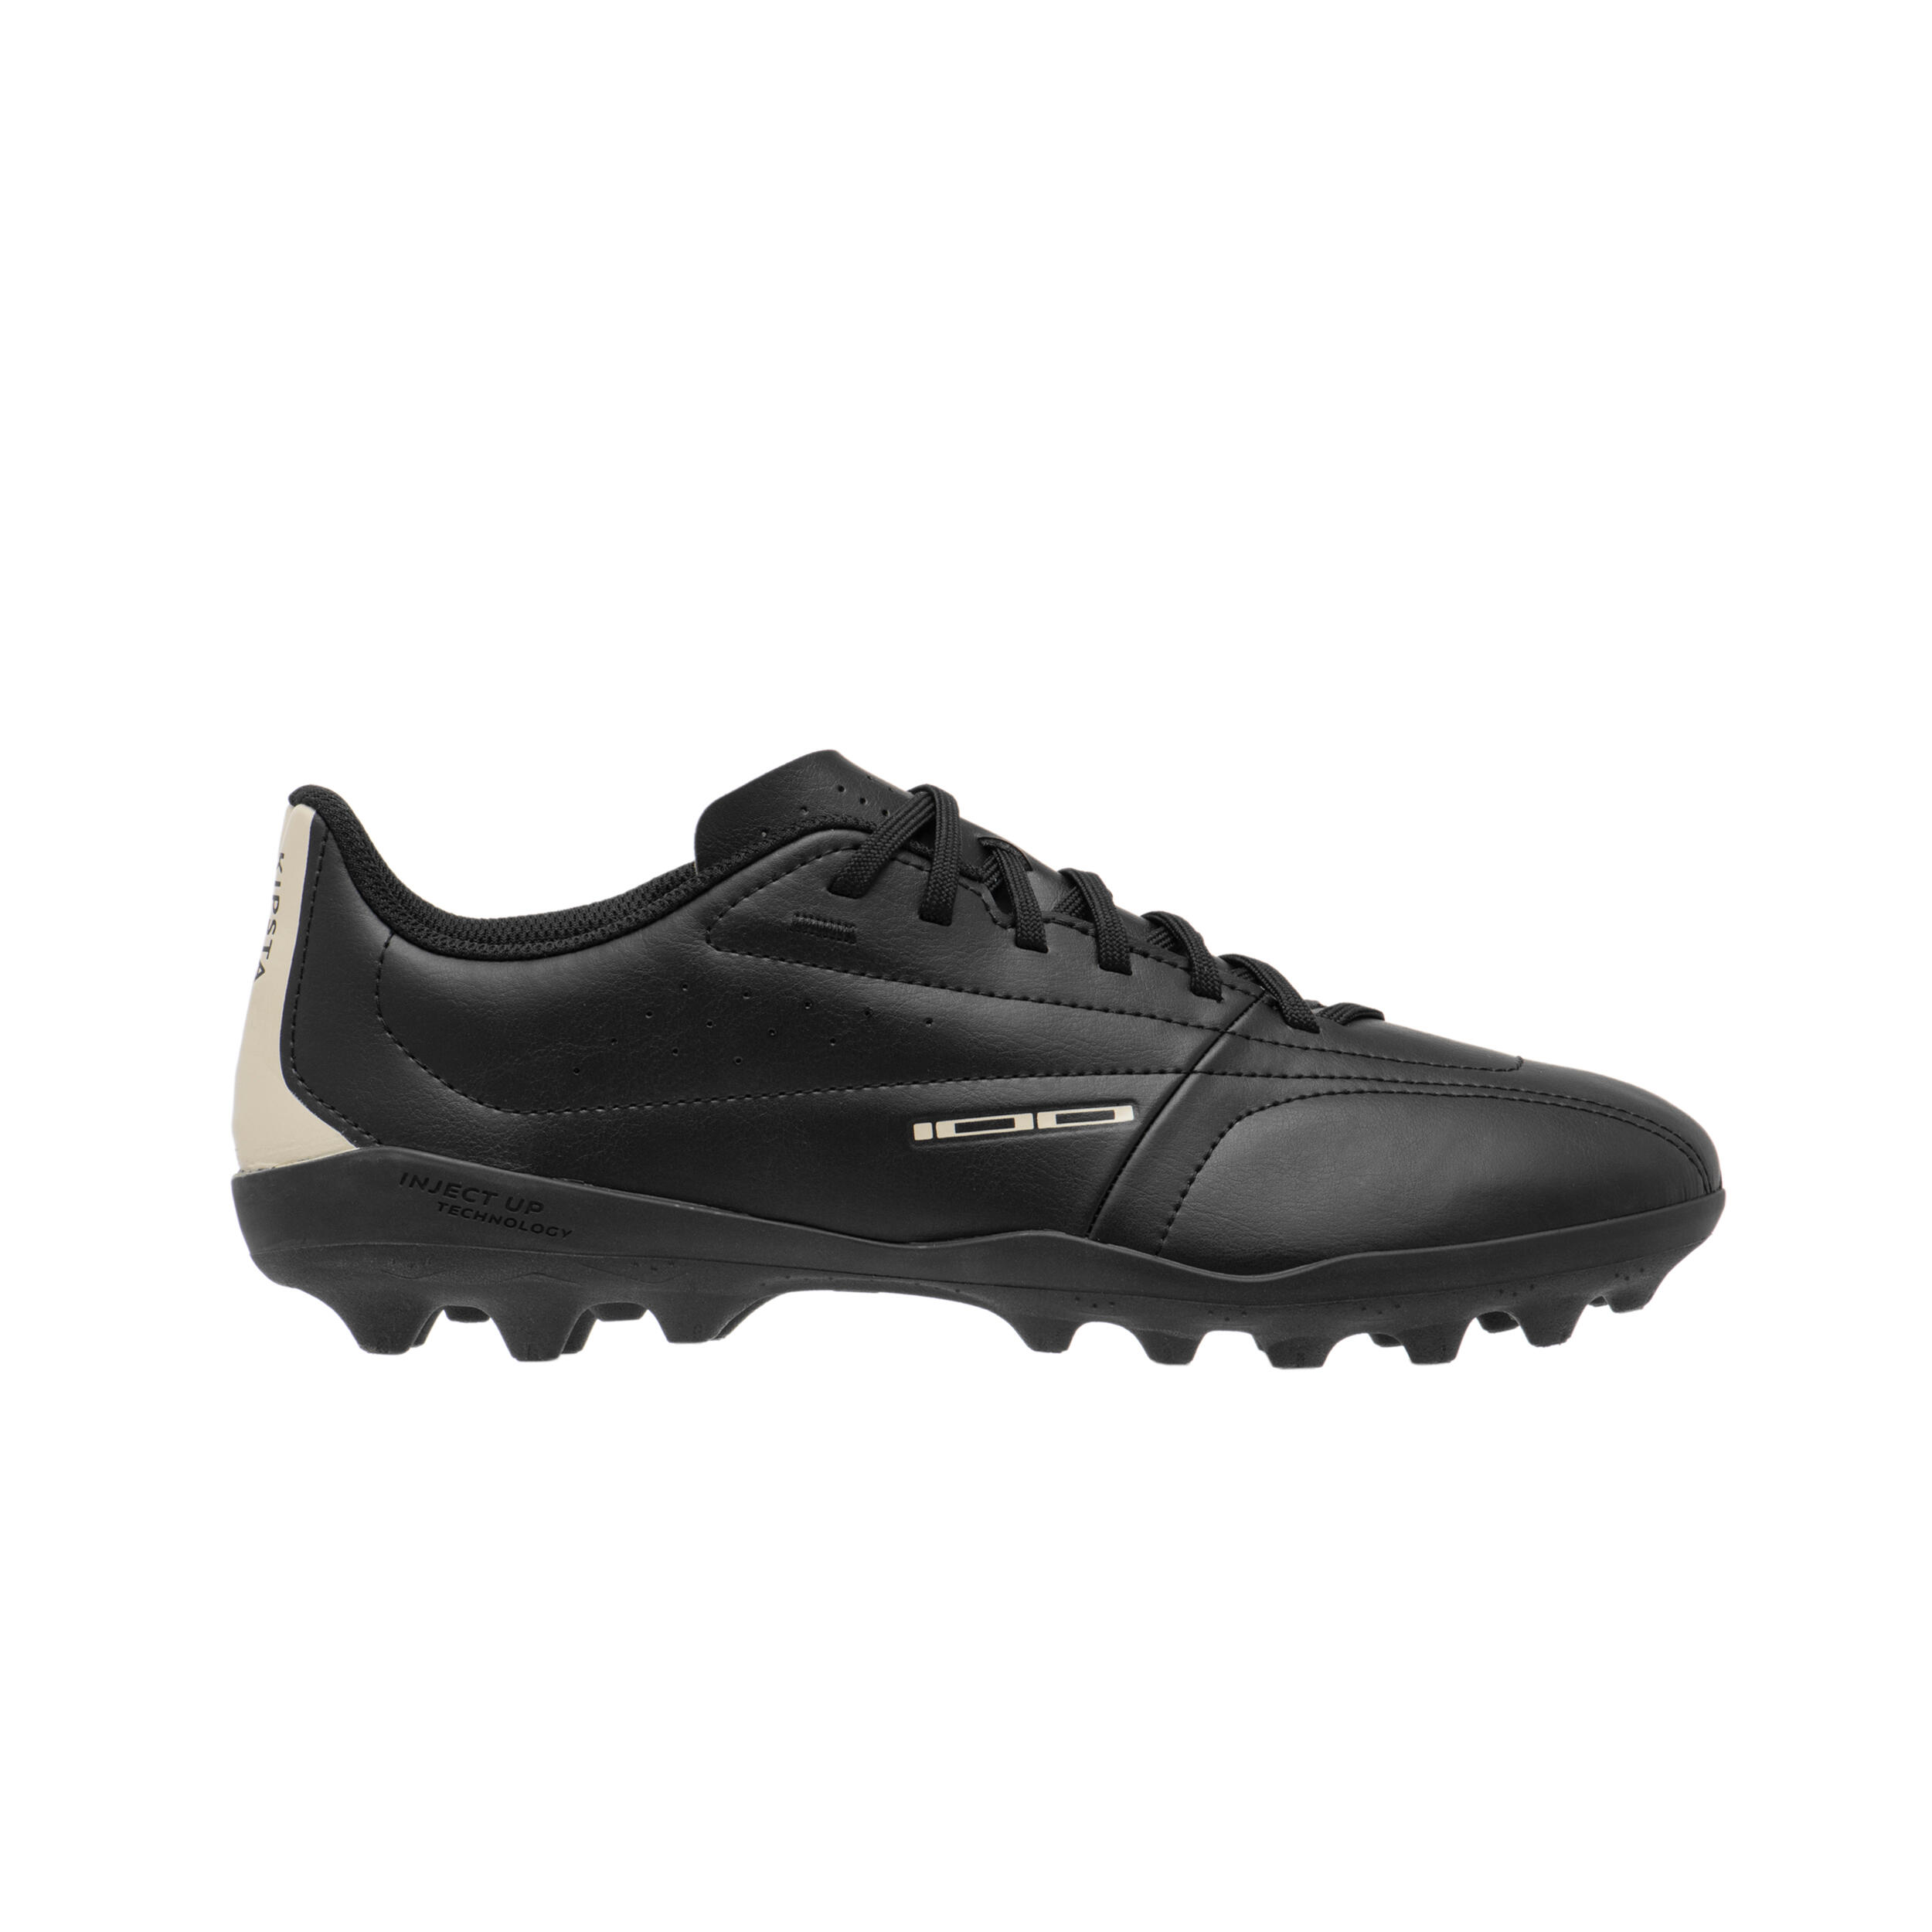 KIPSTA Football Boots 100 MG - Black